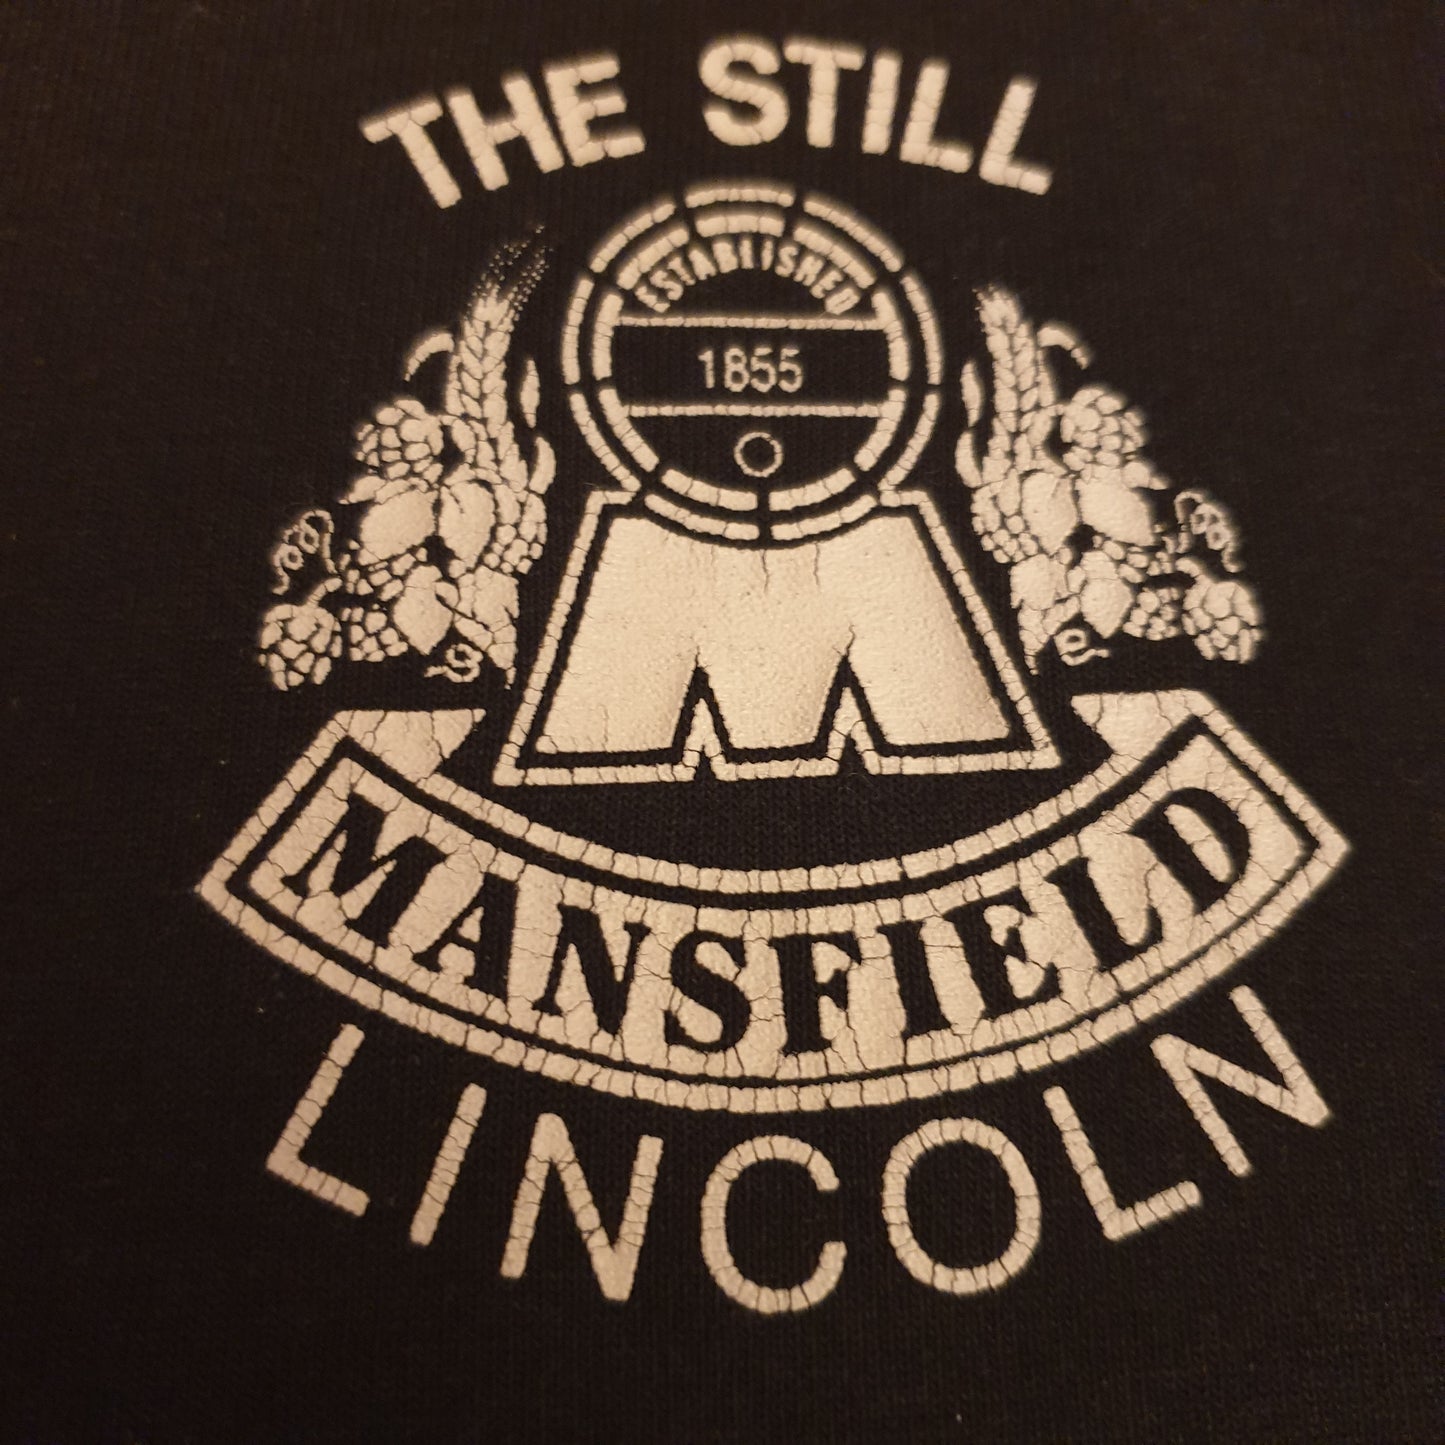 Mansfield Lincoln T-Shirt M